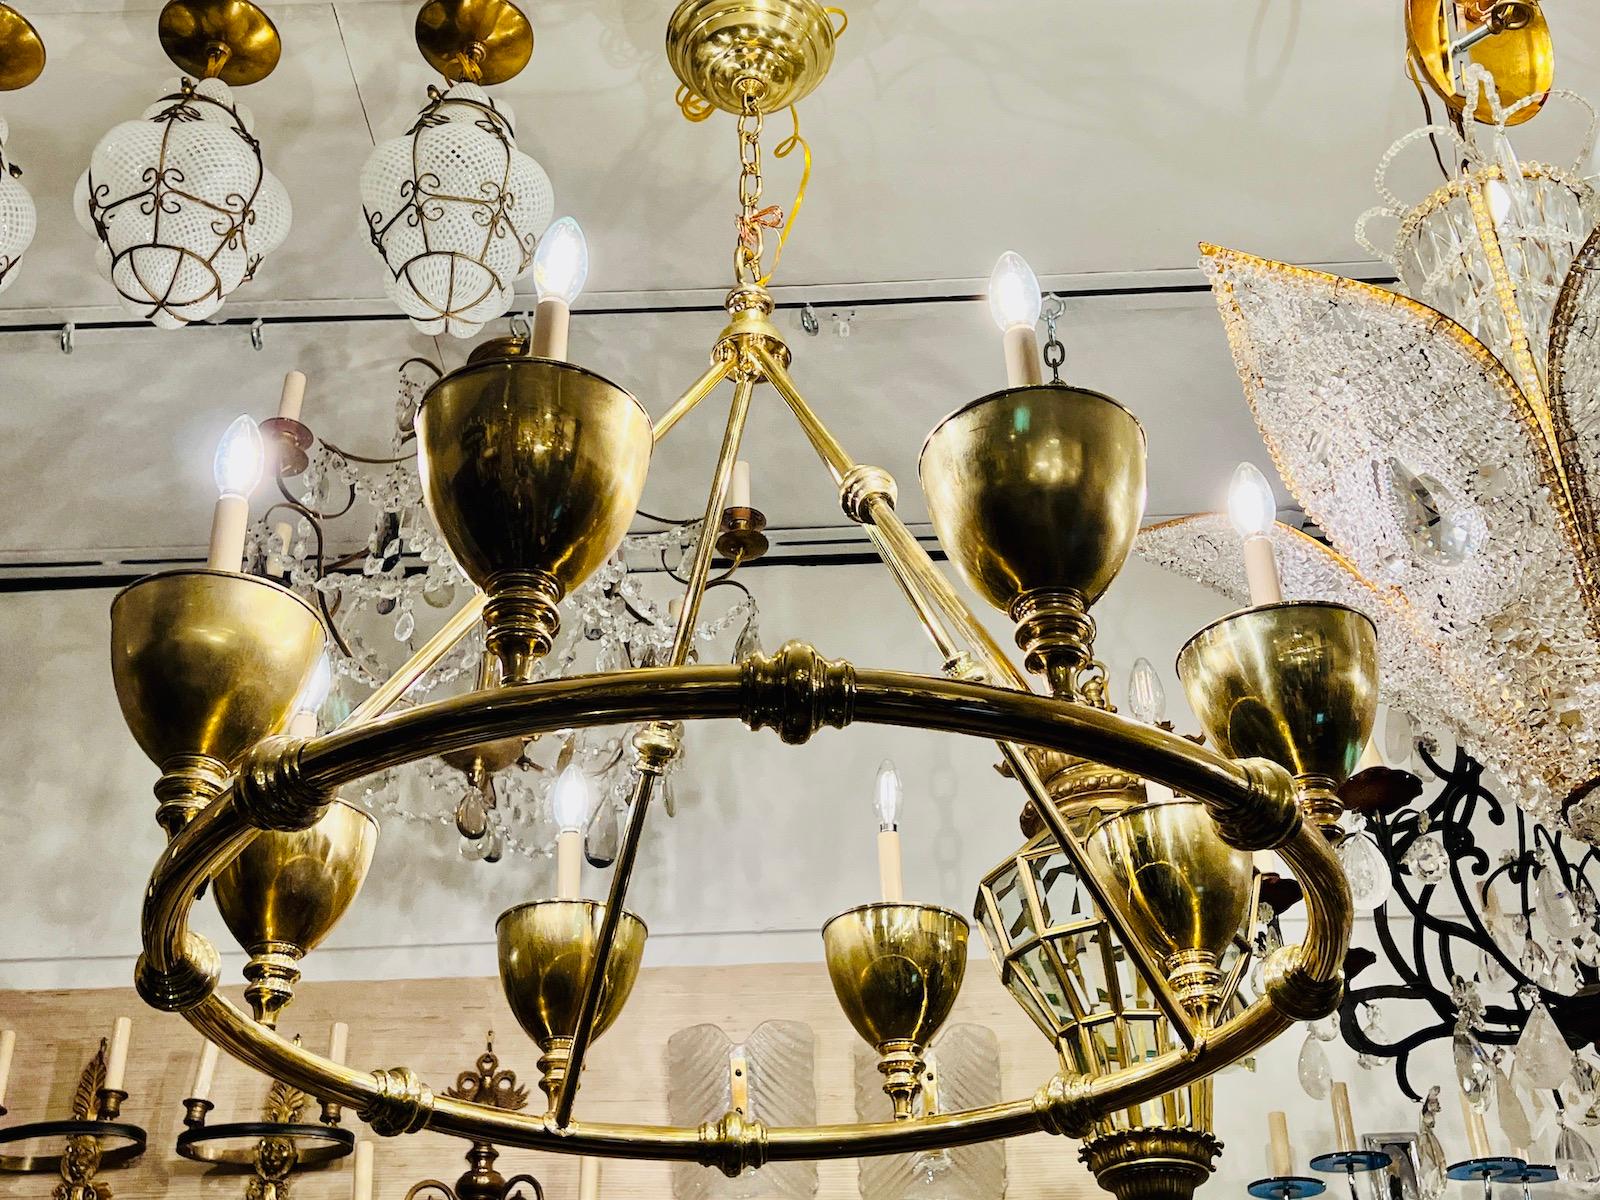 A circa 1960’s Italian polished bronze chandelier.

Measurements:
Current drop: 44?
Diameter: 33?